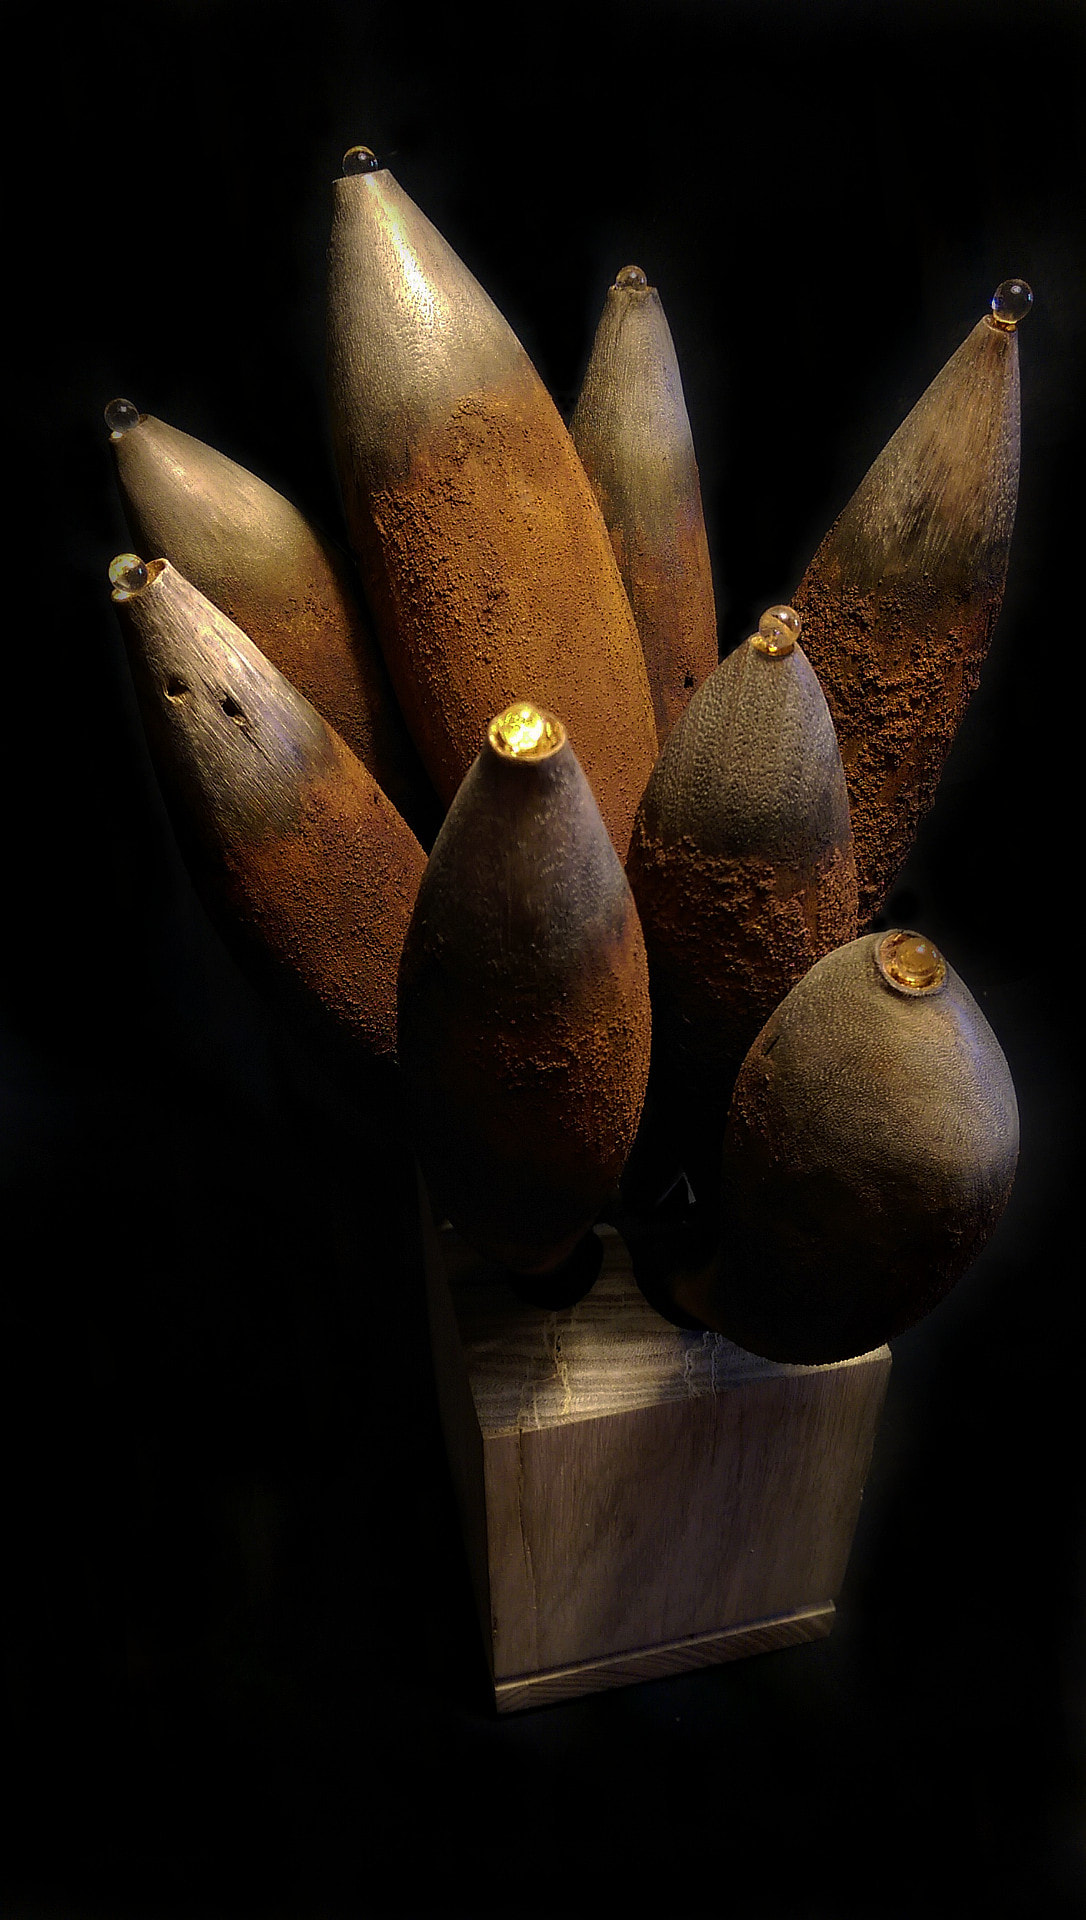 anenome wooden sculpture, grapes, squirt, nudi, tentacle, jewel, brandt naock